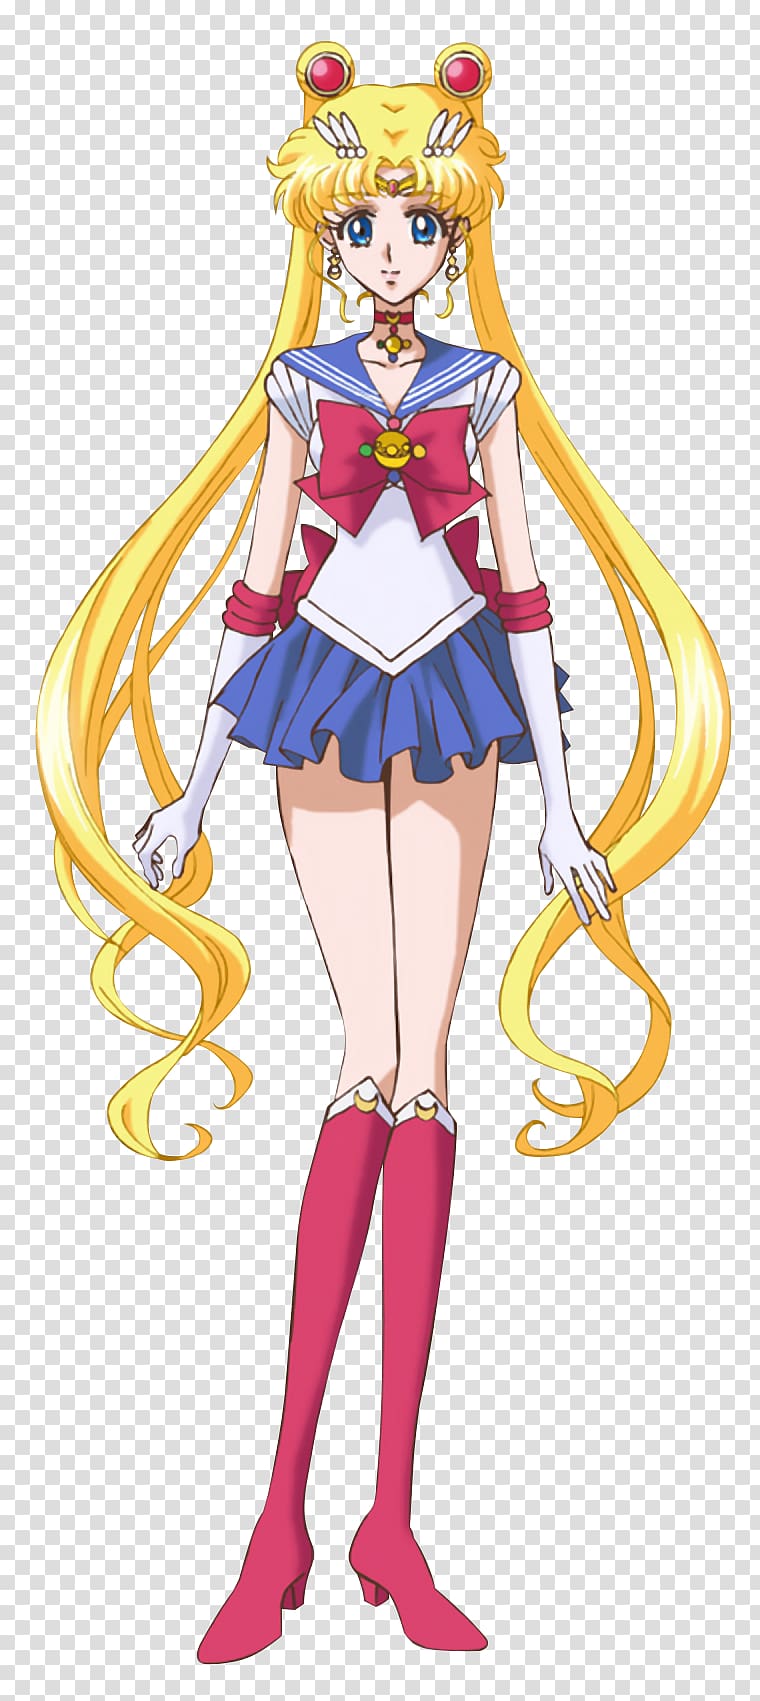 Sailor Moon Sailor Venus Chibiusa Sailor Mercury Sailor Jupiter, Sailor Neptune transparent background PNG clipart